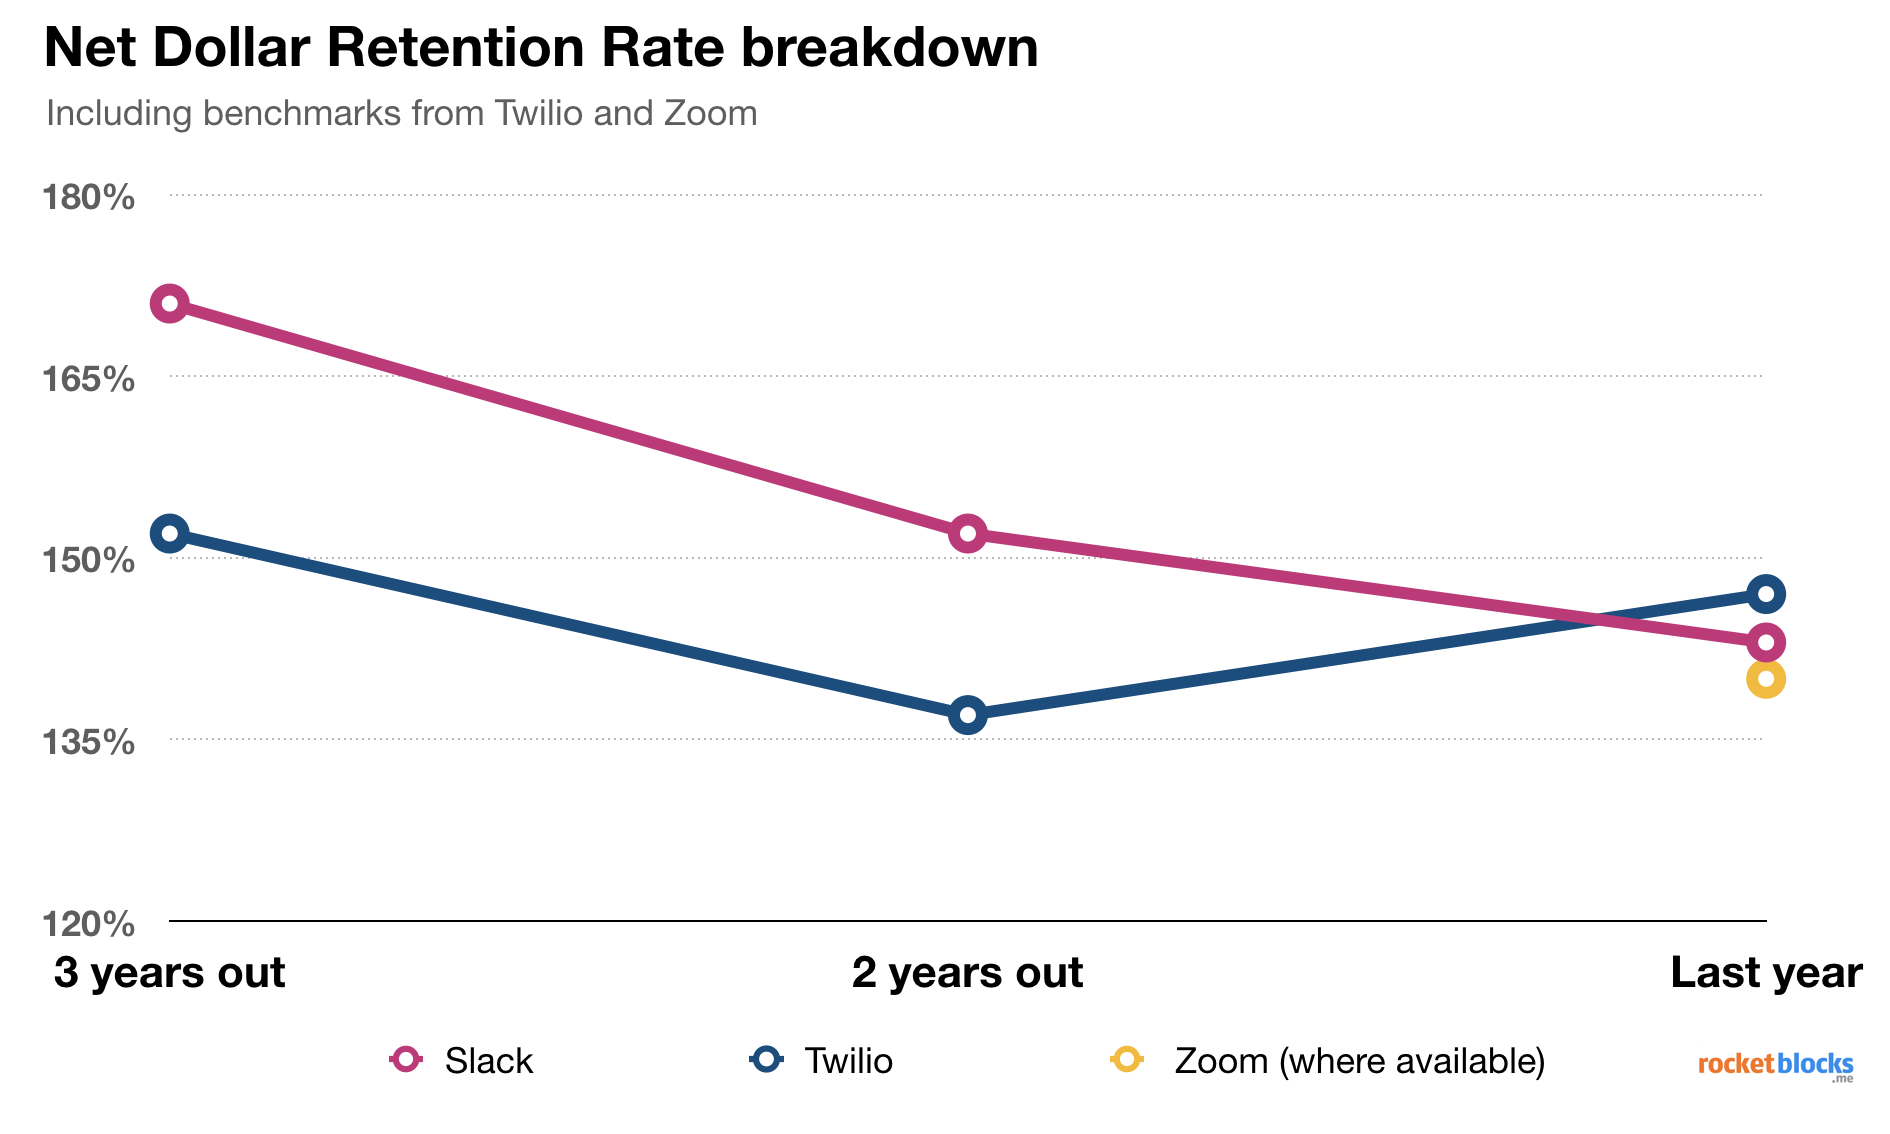 Slack's net dollar retention rate figures, last three years